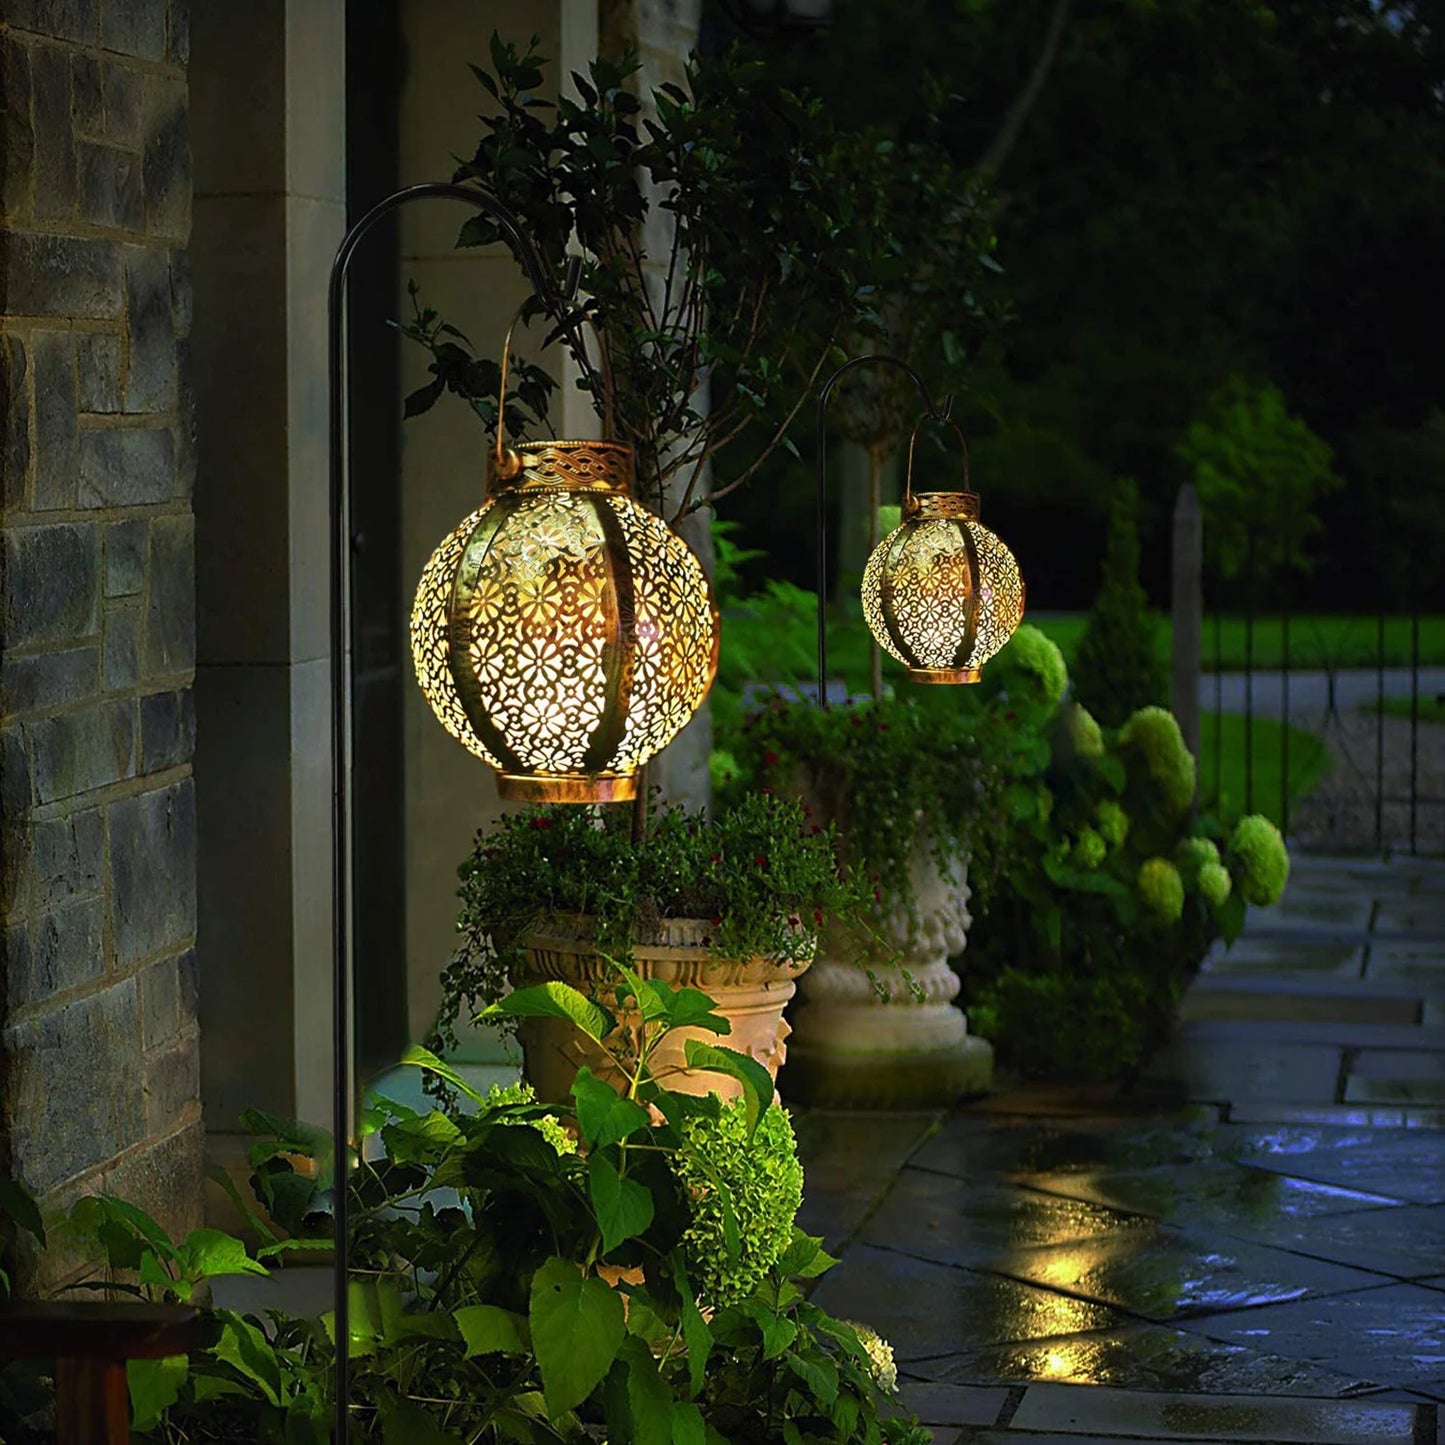 Waterproof Solar Lamp Retro Hollow Lantern Light Outdoor Hanging   Landscape Lighting Wrought Iron Garden Decorative Lanterns